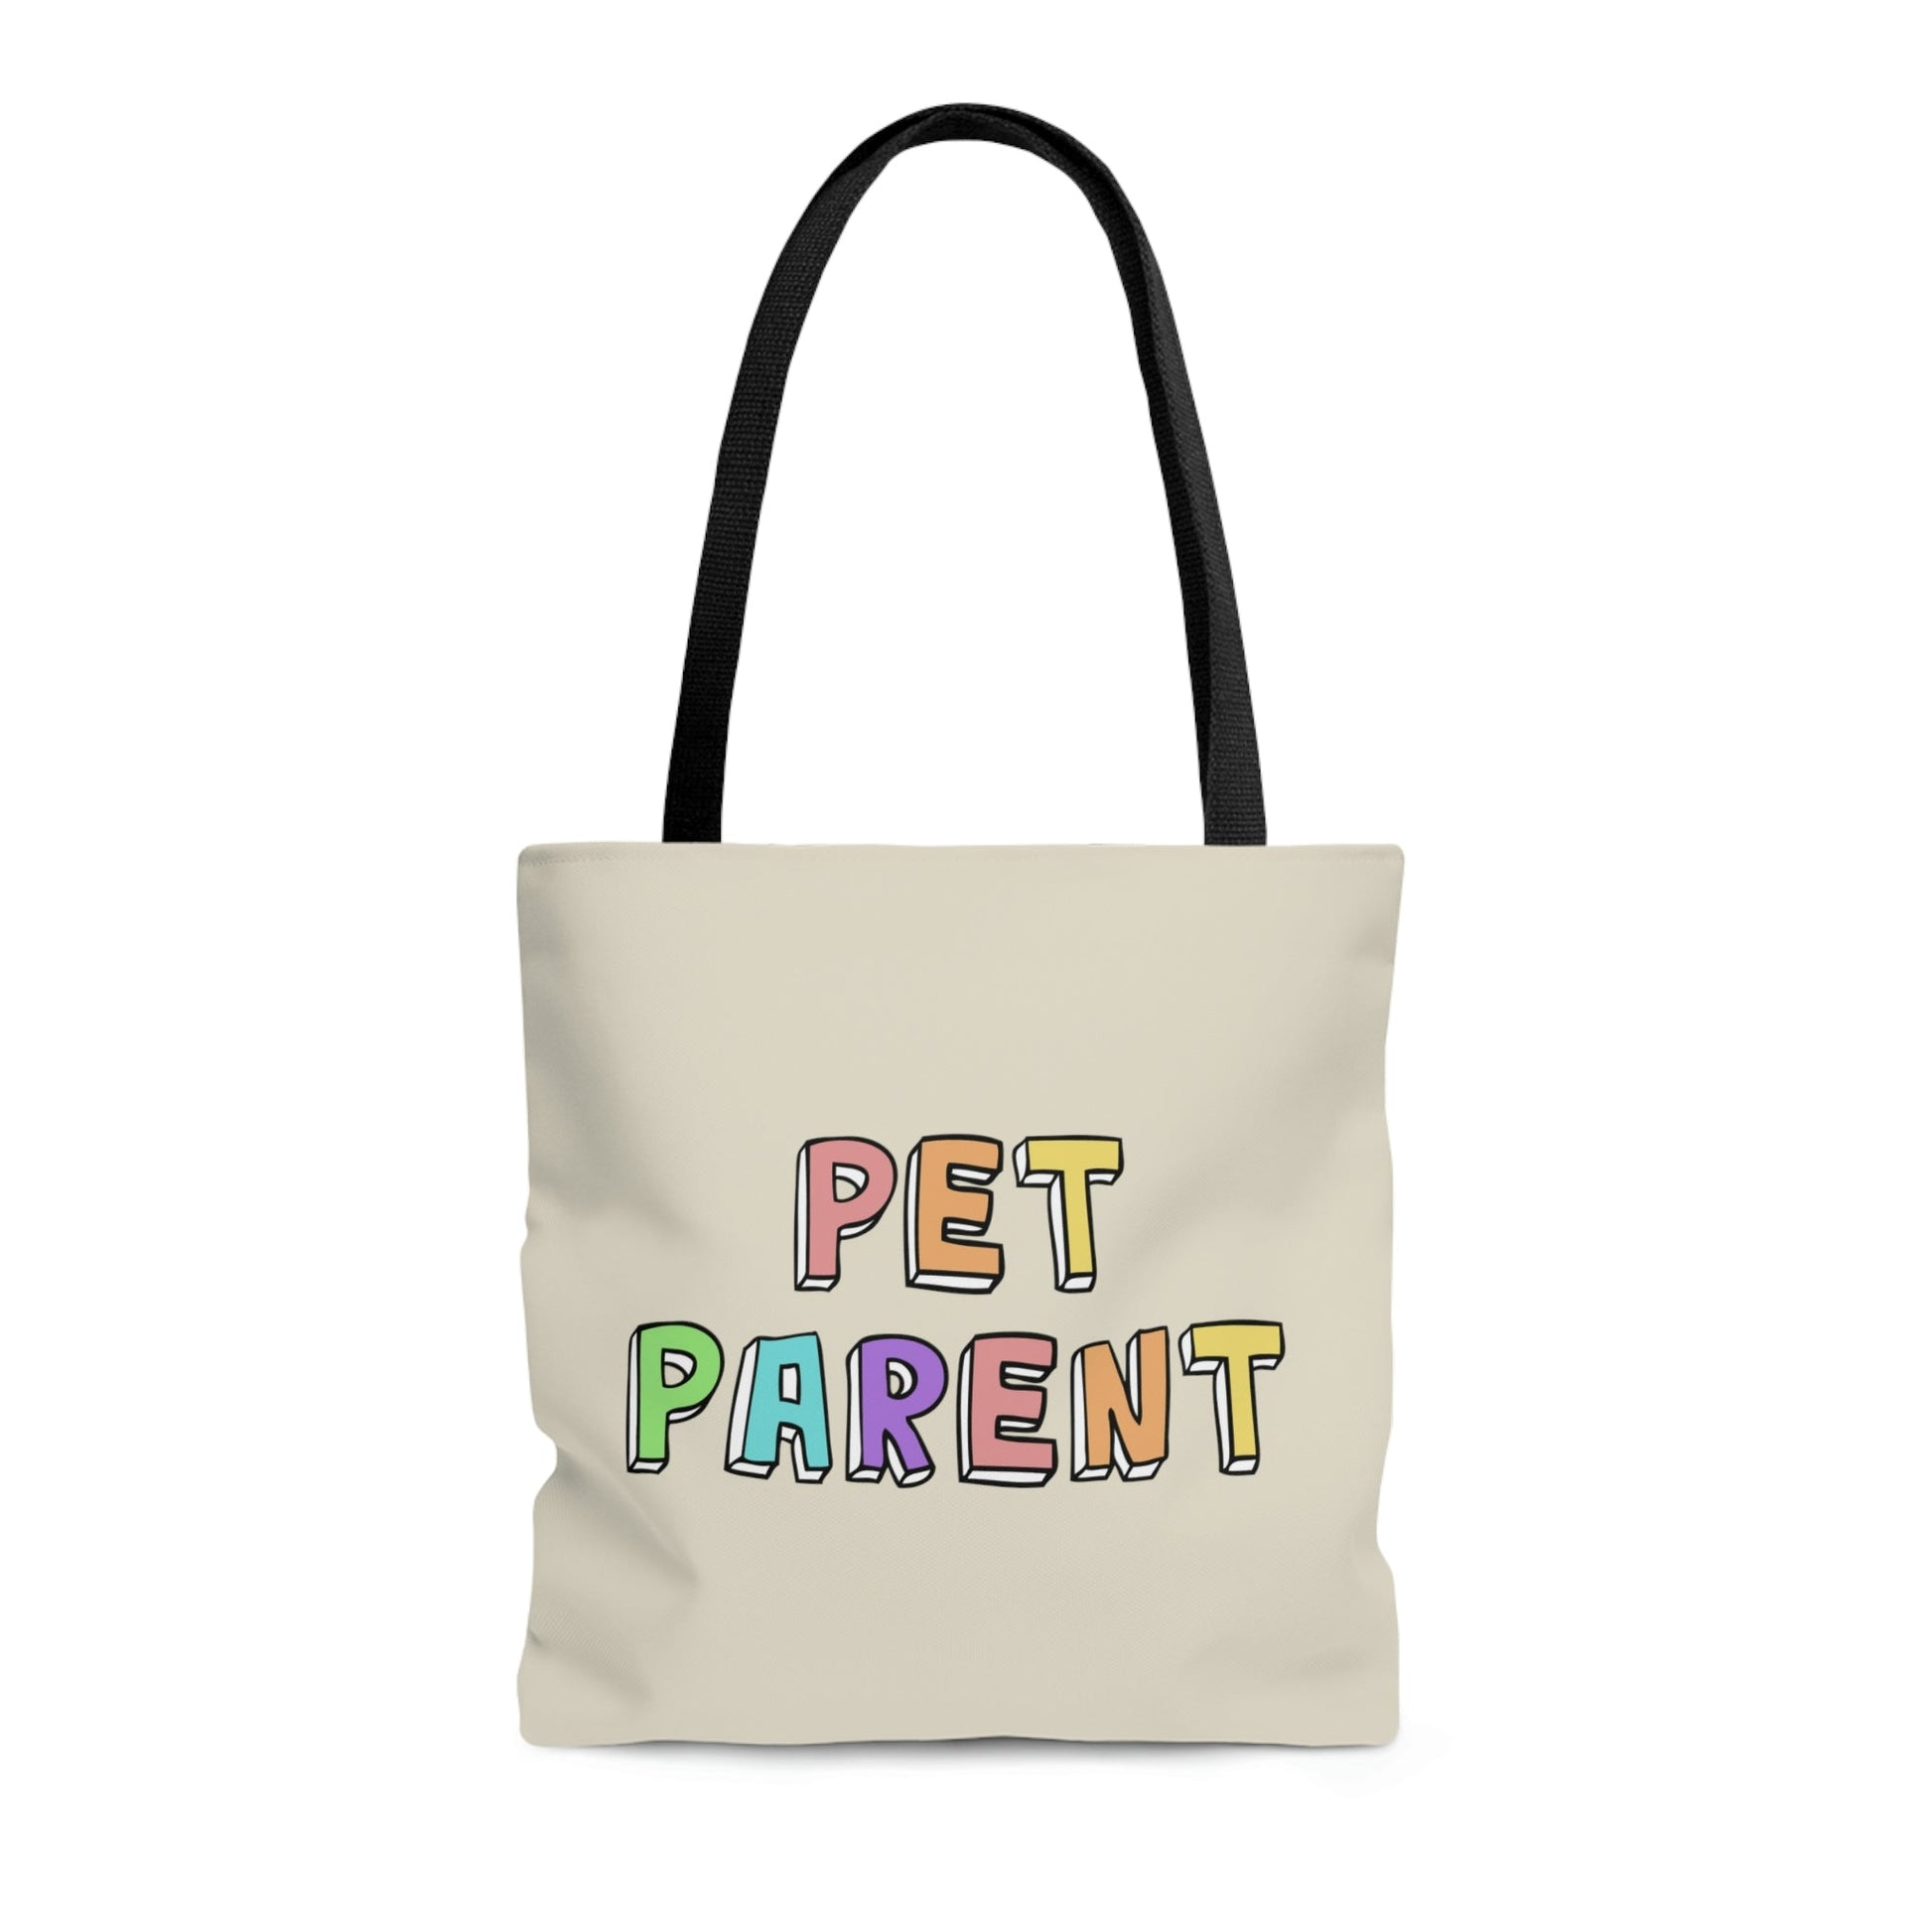 Pet Parent | Tote Bag - Detezi Designs-13654007511003395906